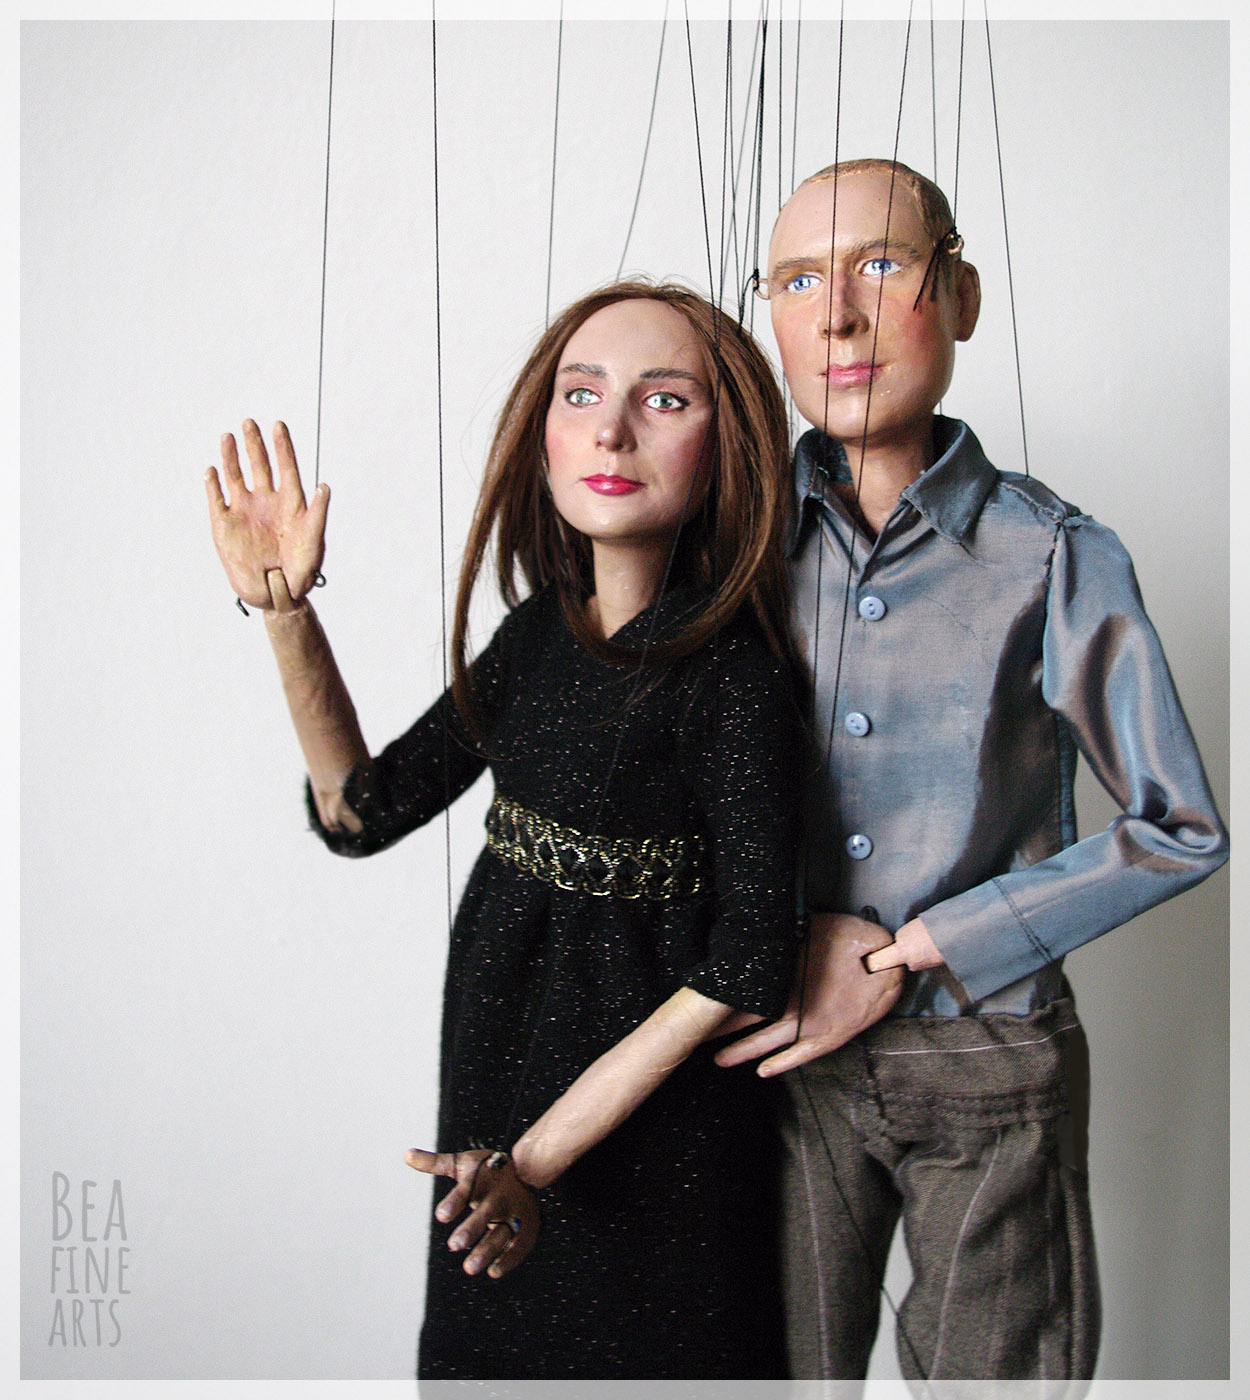 Para ksiażęca, marionetki portretowe